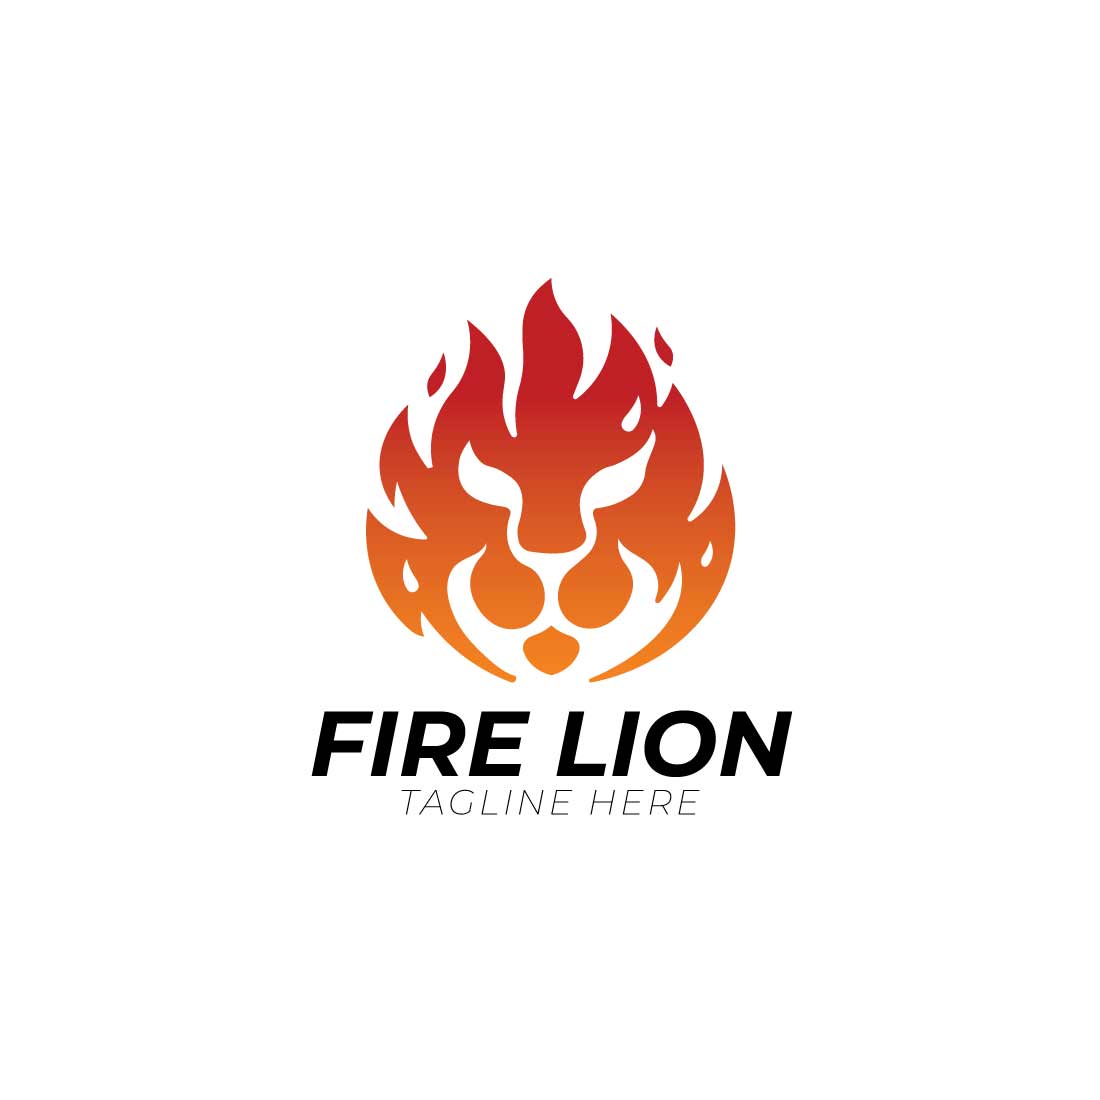 Professional Fire Lion design cover image.